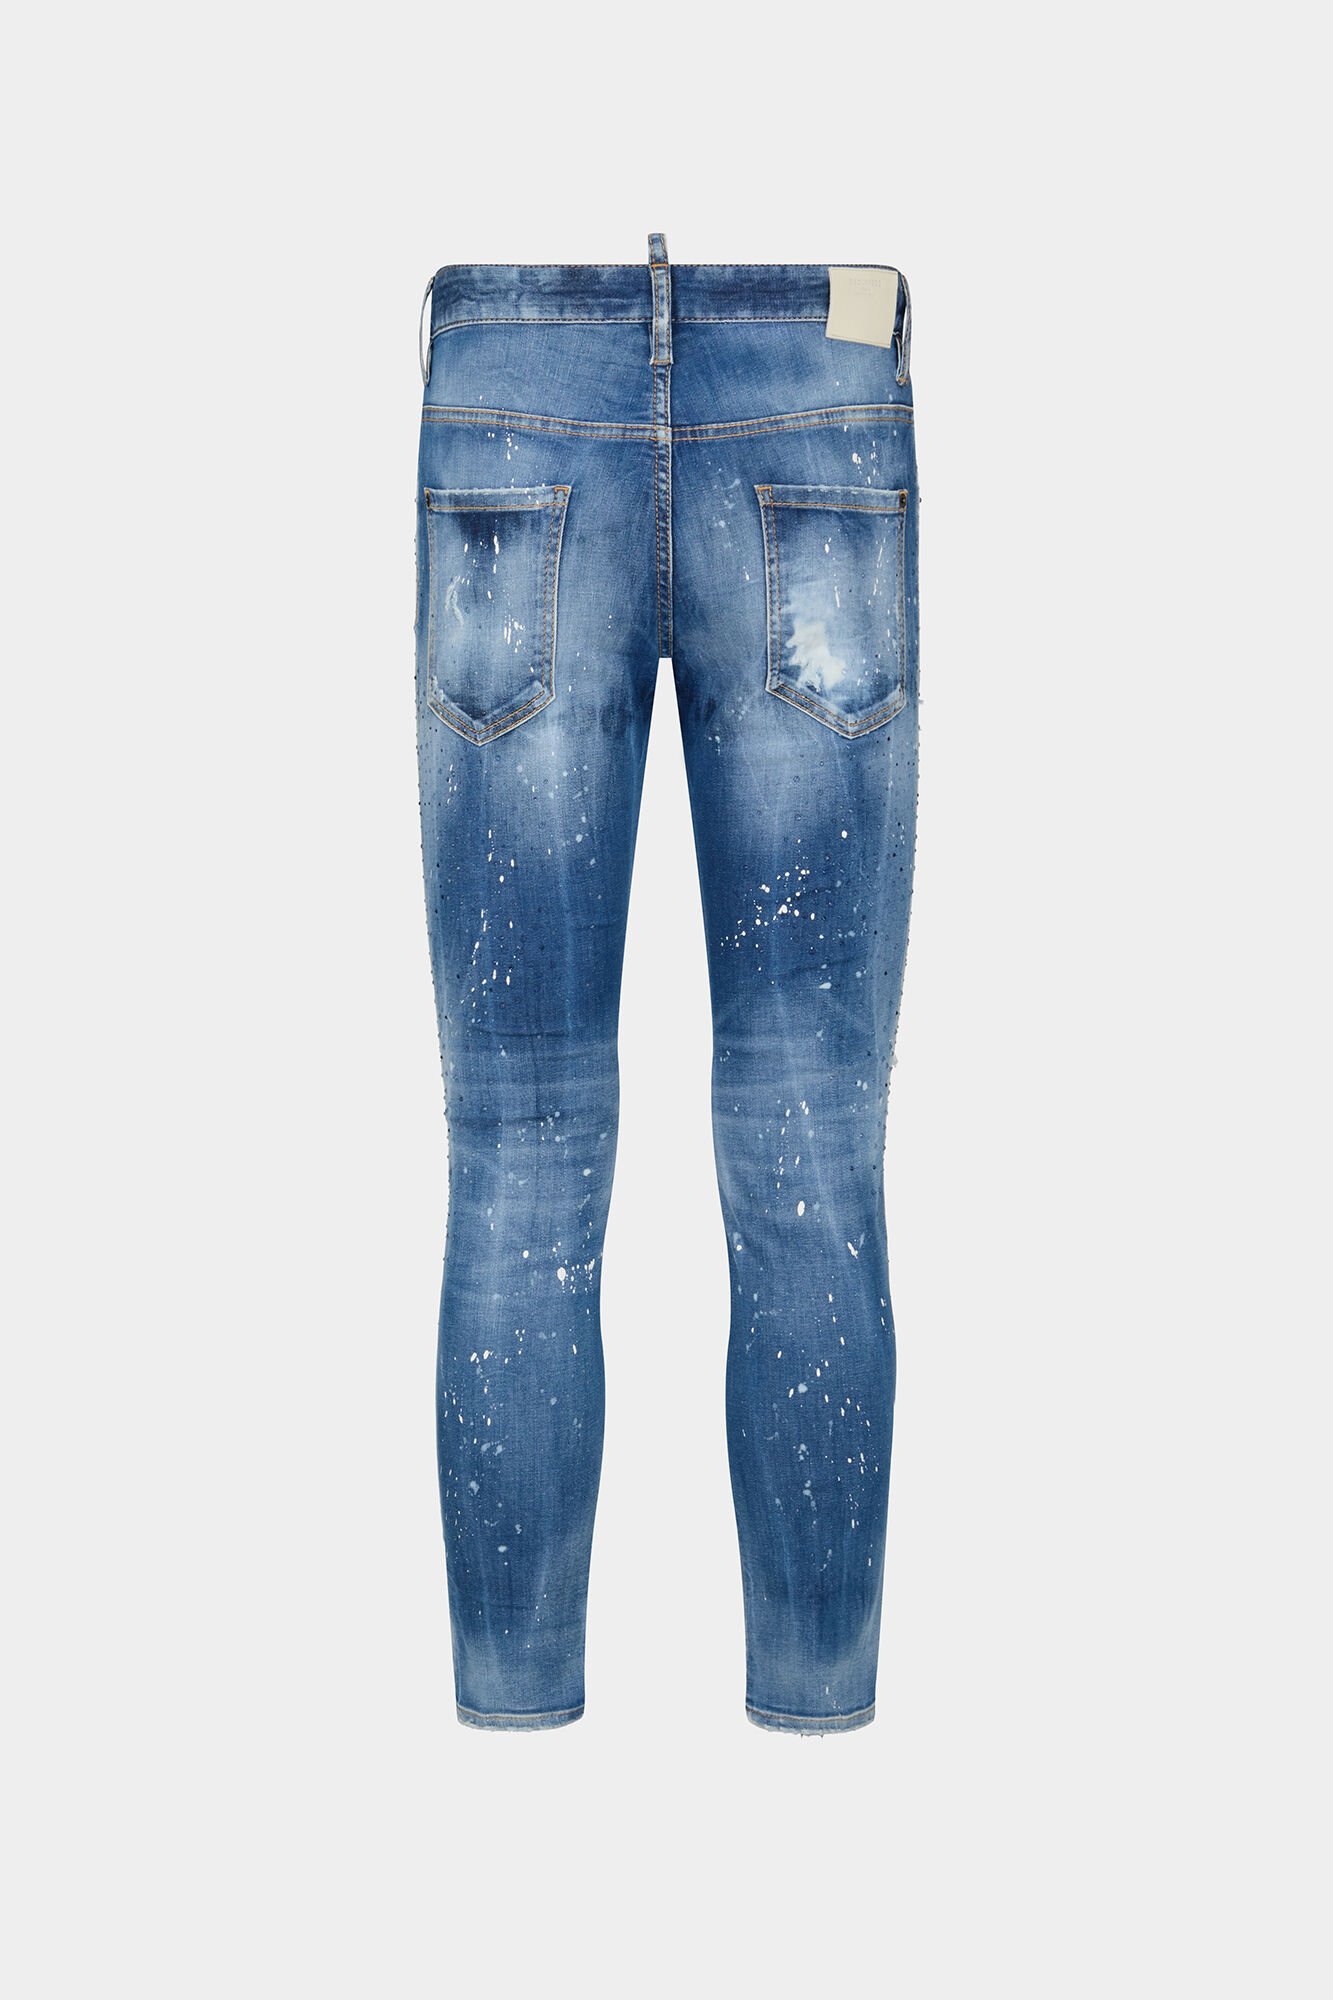 Medium Iced Spots Wash Super Twinky Jeans